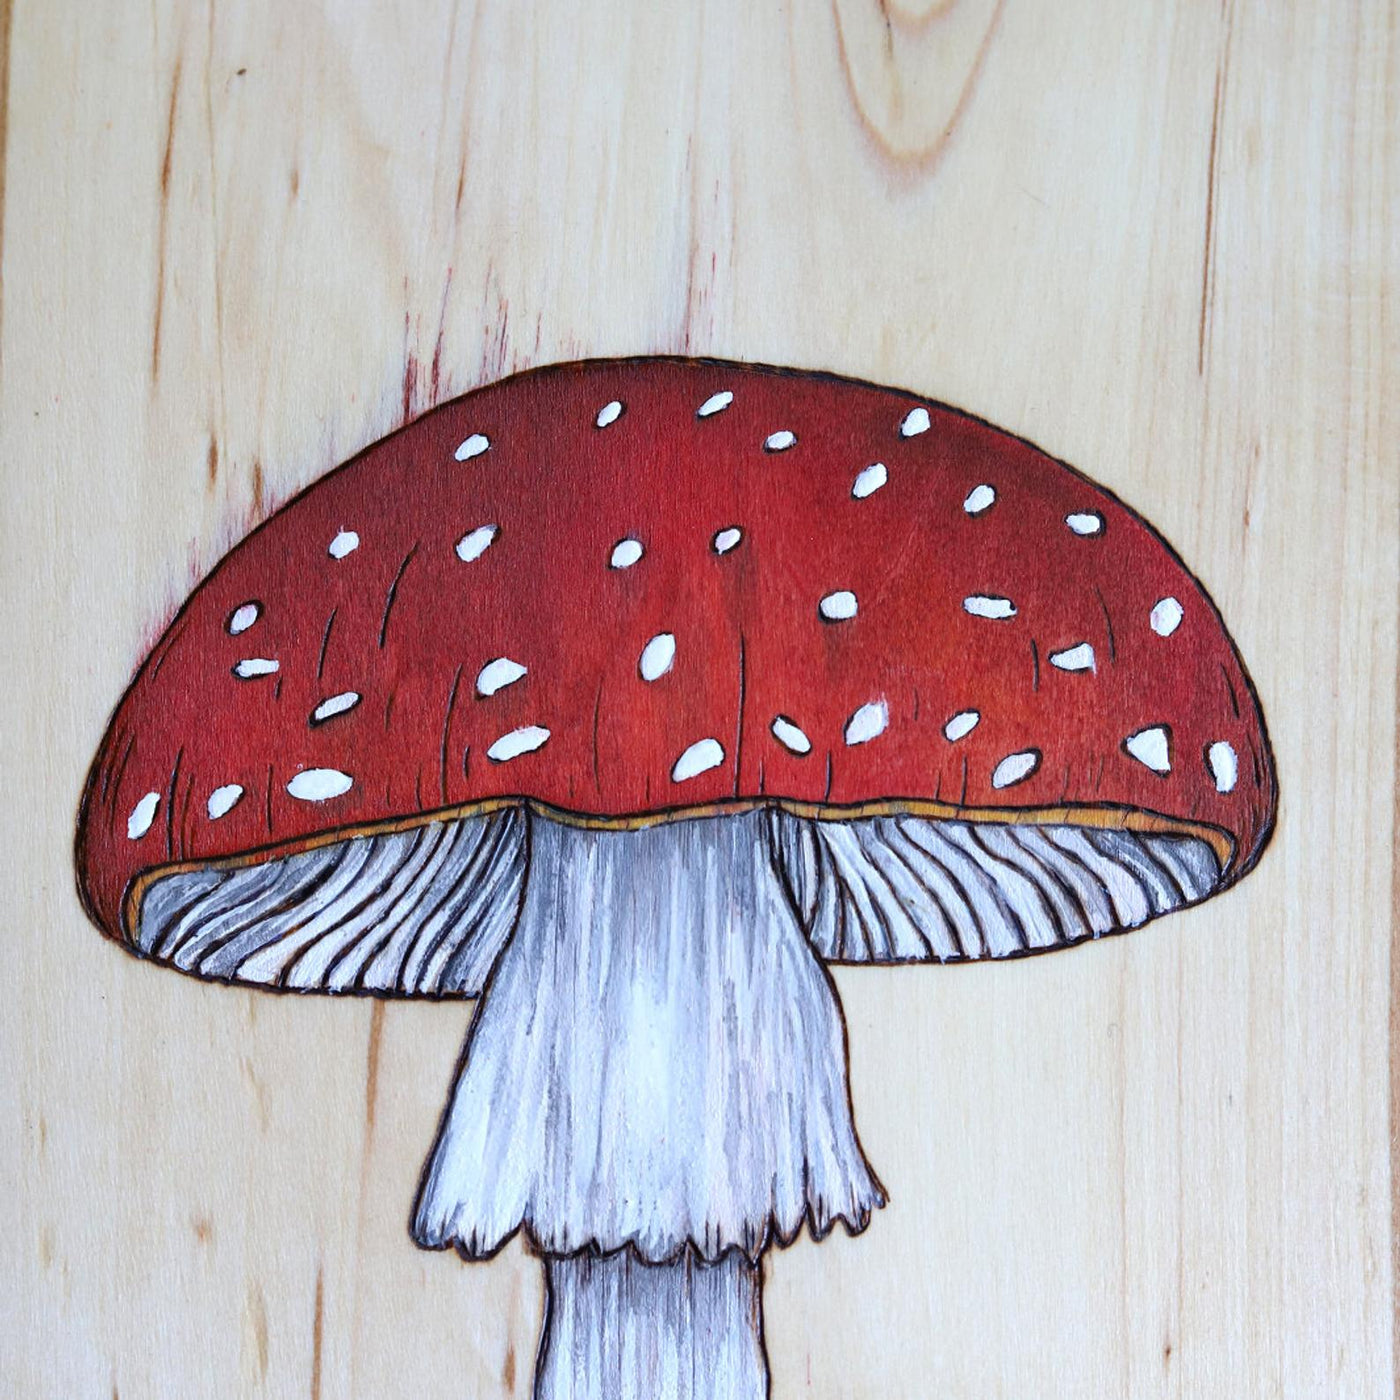 Watercolor Mushroom Wood Sign